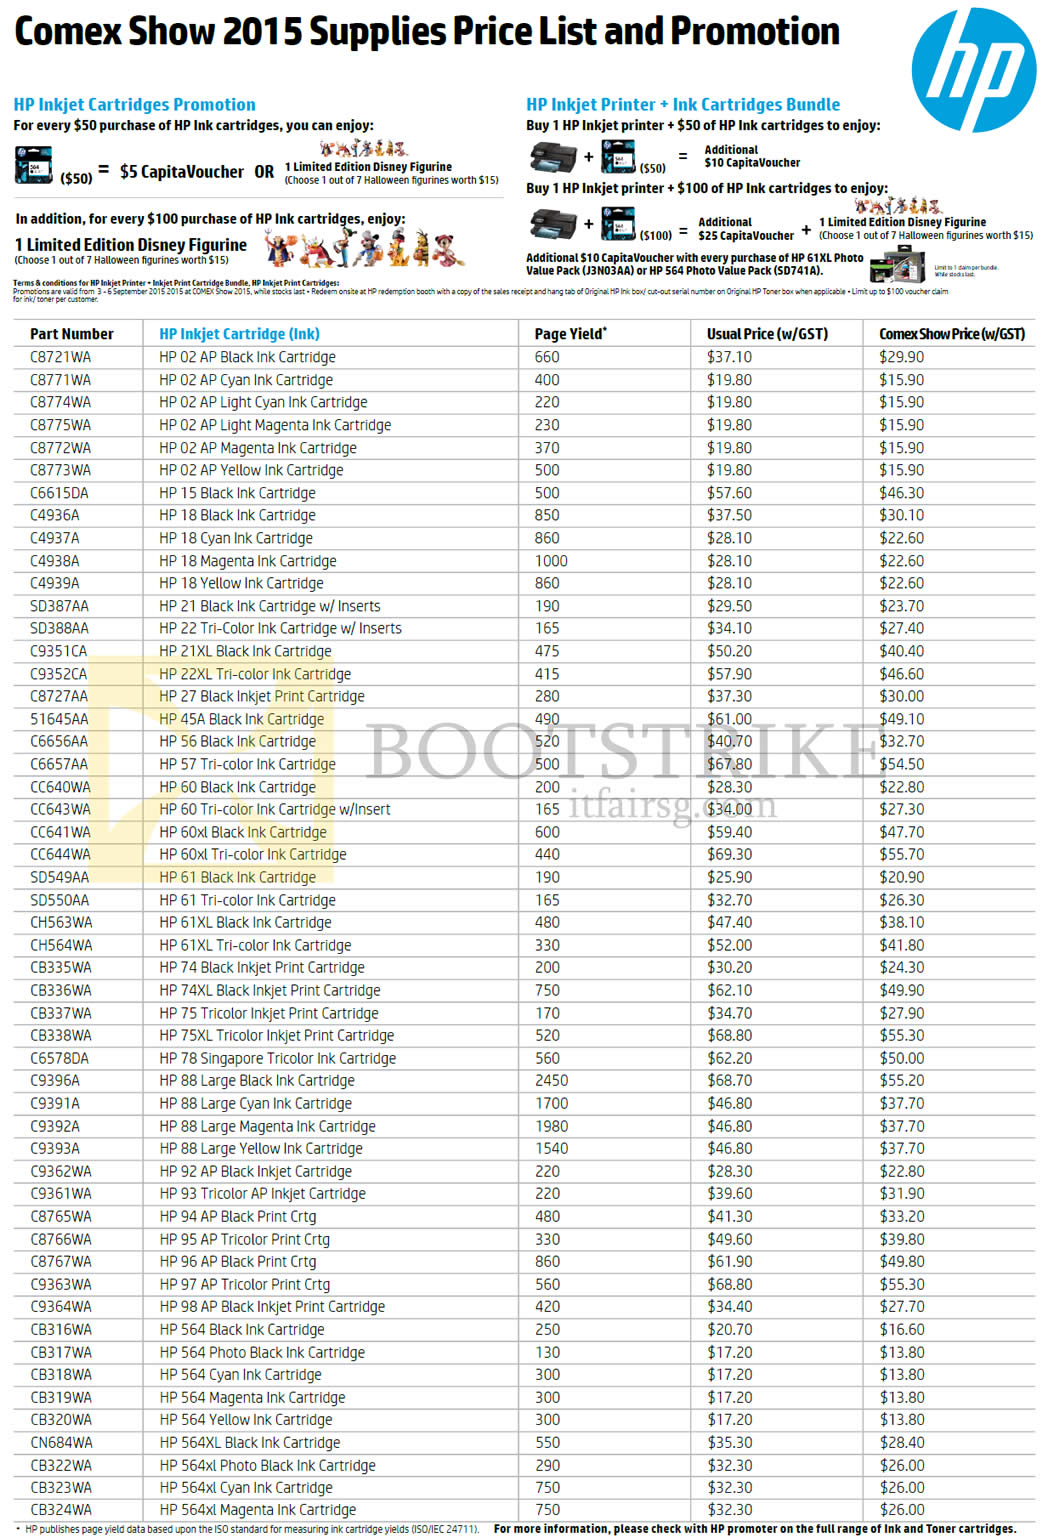 COMEX 2015 price list image brochure of HP Ink Cartridge Price List